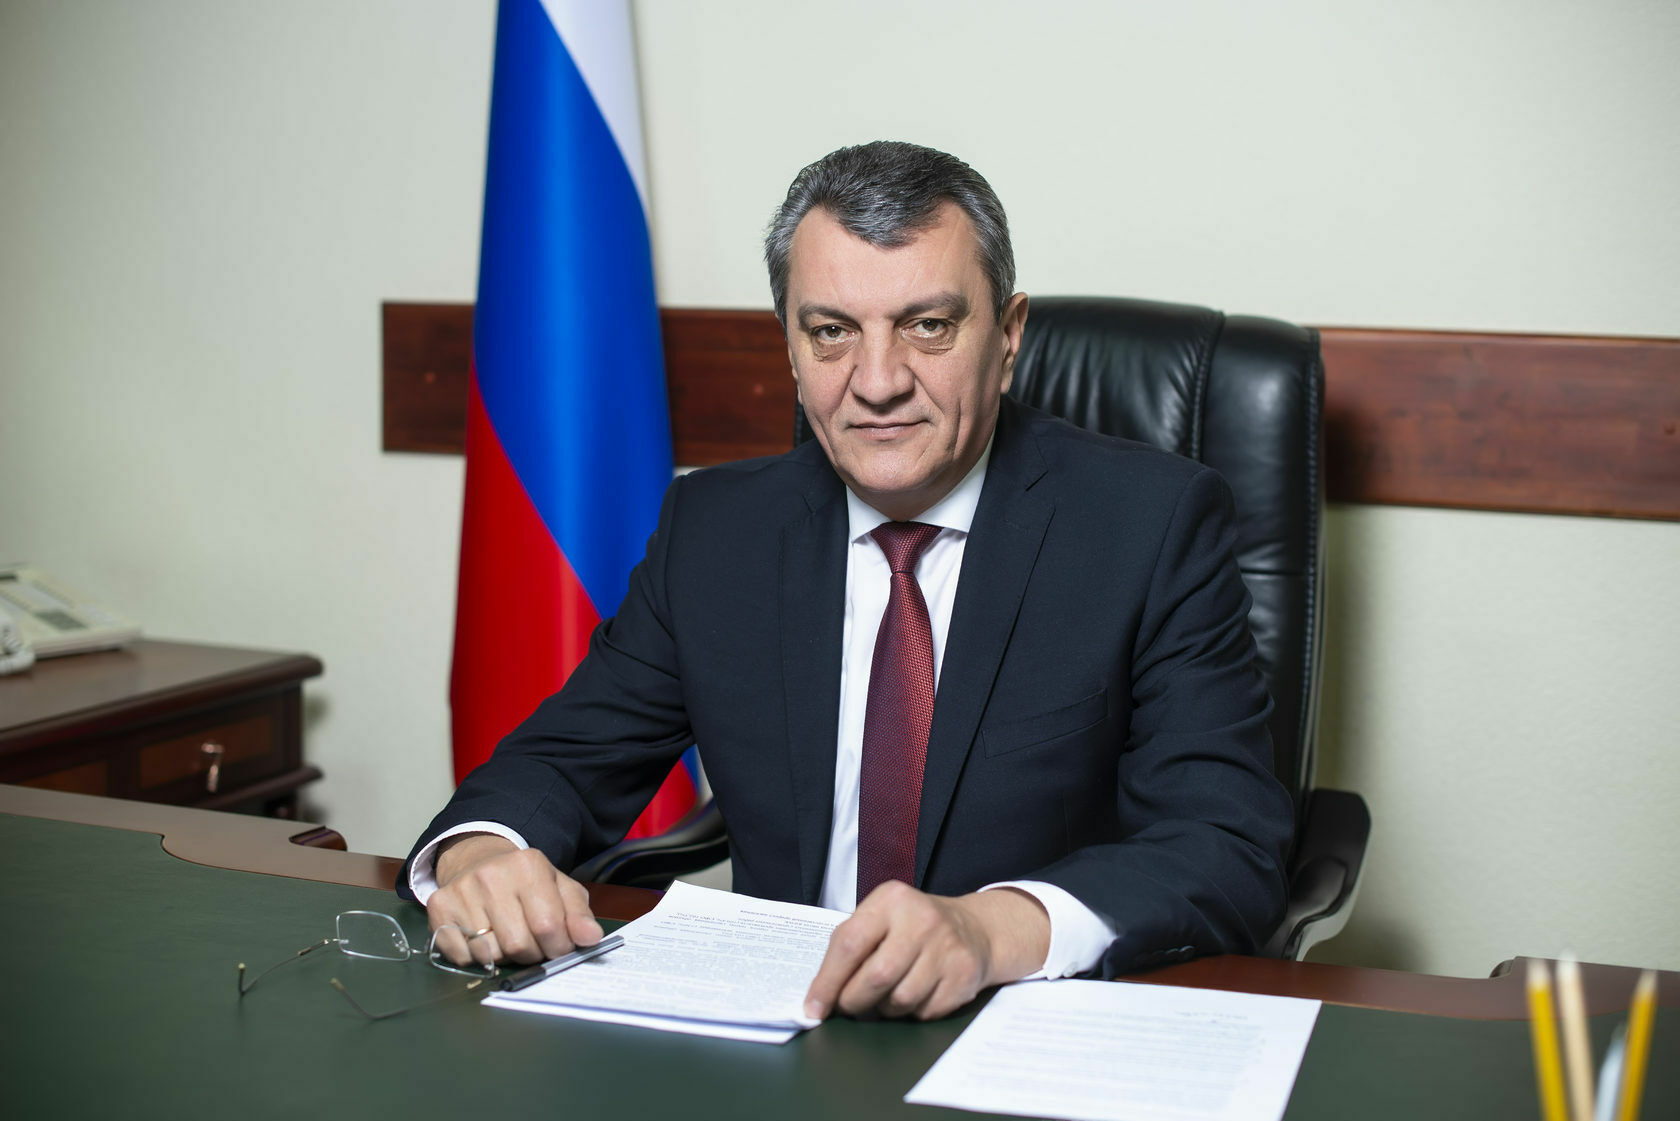 Sergey Menyailo elected head of North Ossetia